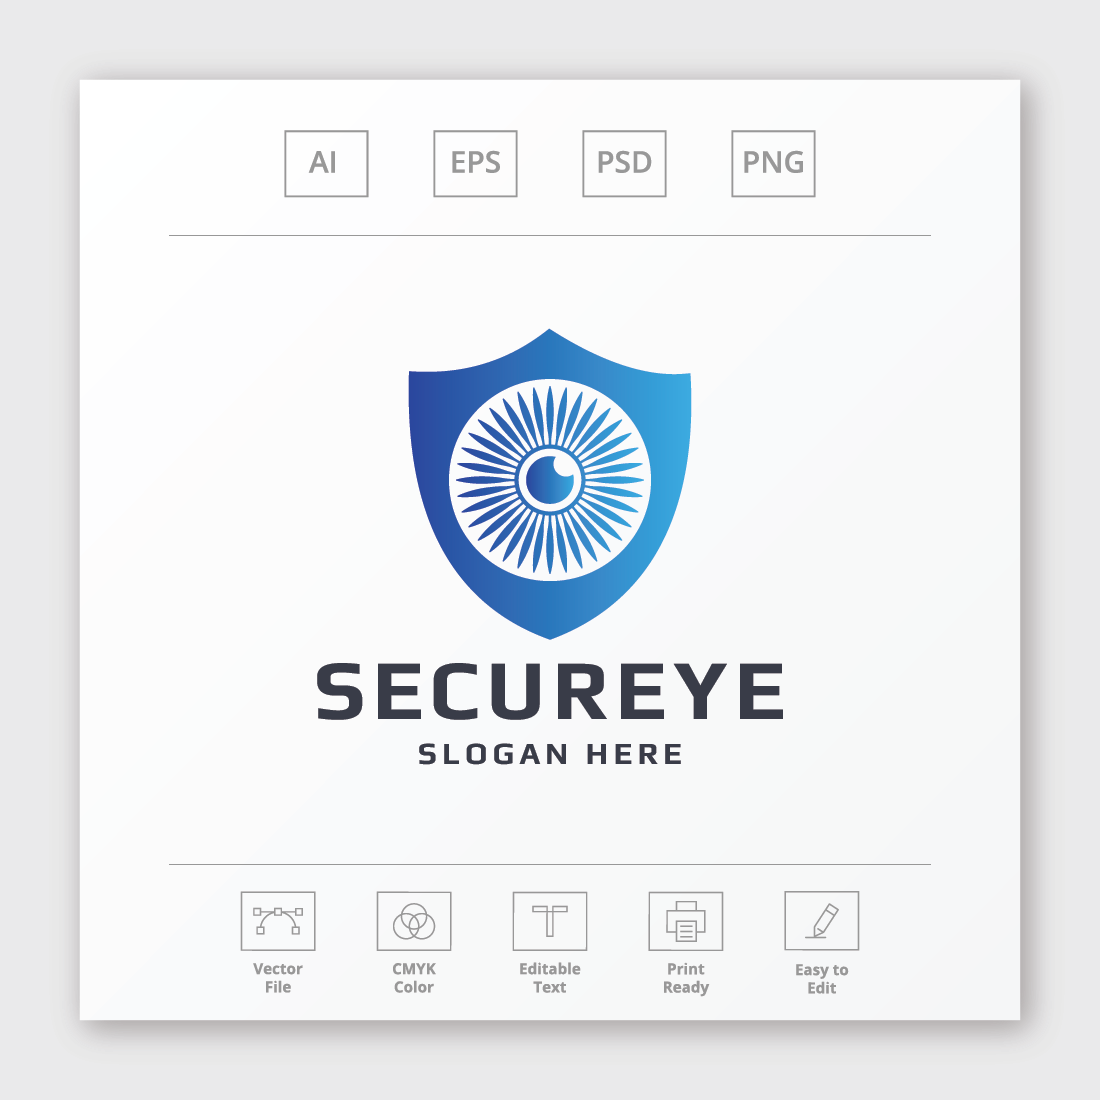 Secure Digital Eye Logo preview image.